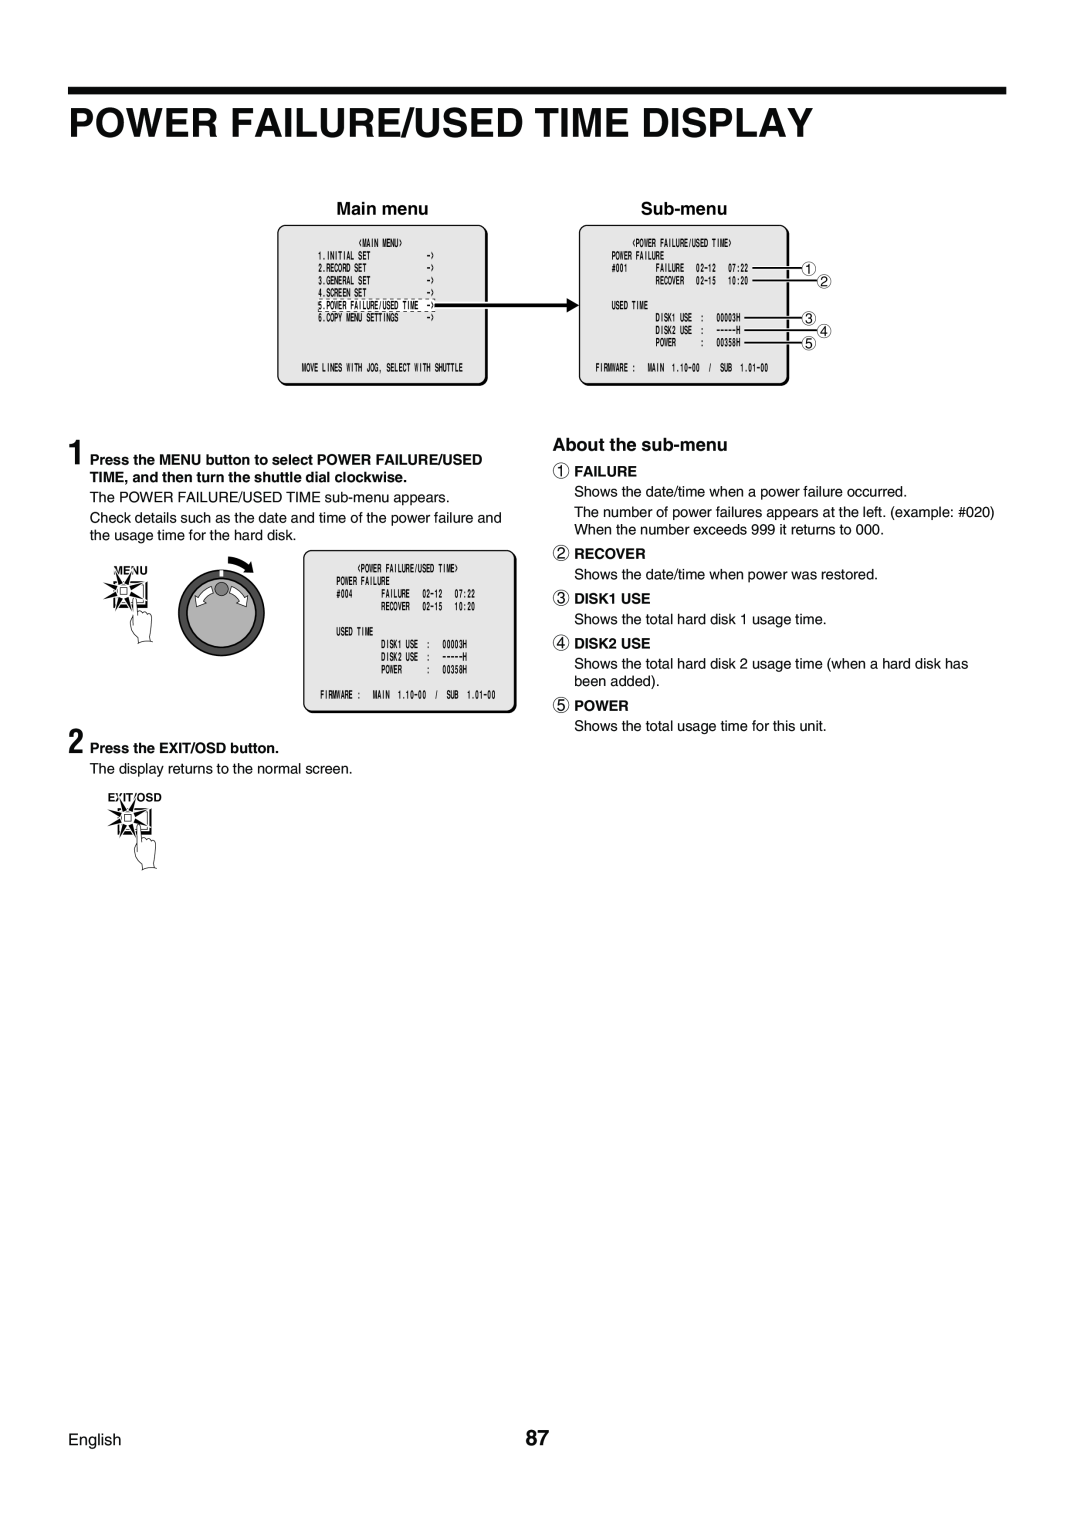 Sanyo DSR-3009P Power Failure/Used Time Display, Main menu, Sub-menu, About the sub-menu, Press the EXIT/OSD button 